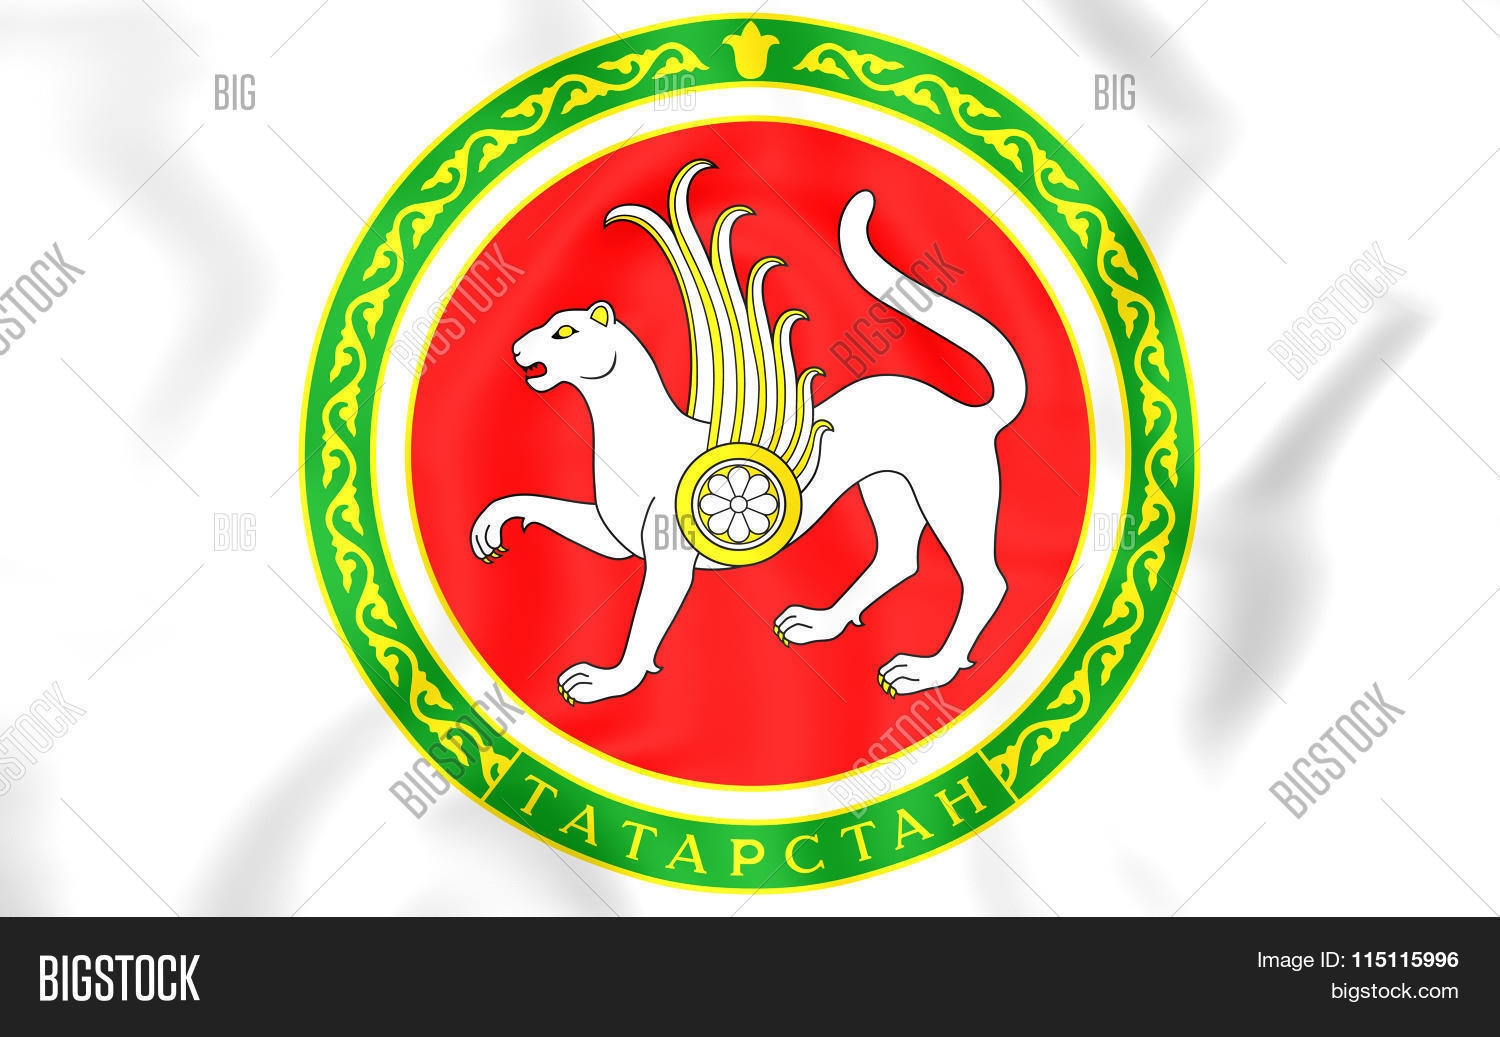 Гербу Республики Татарстан – 25 лет